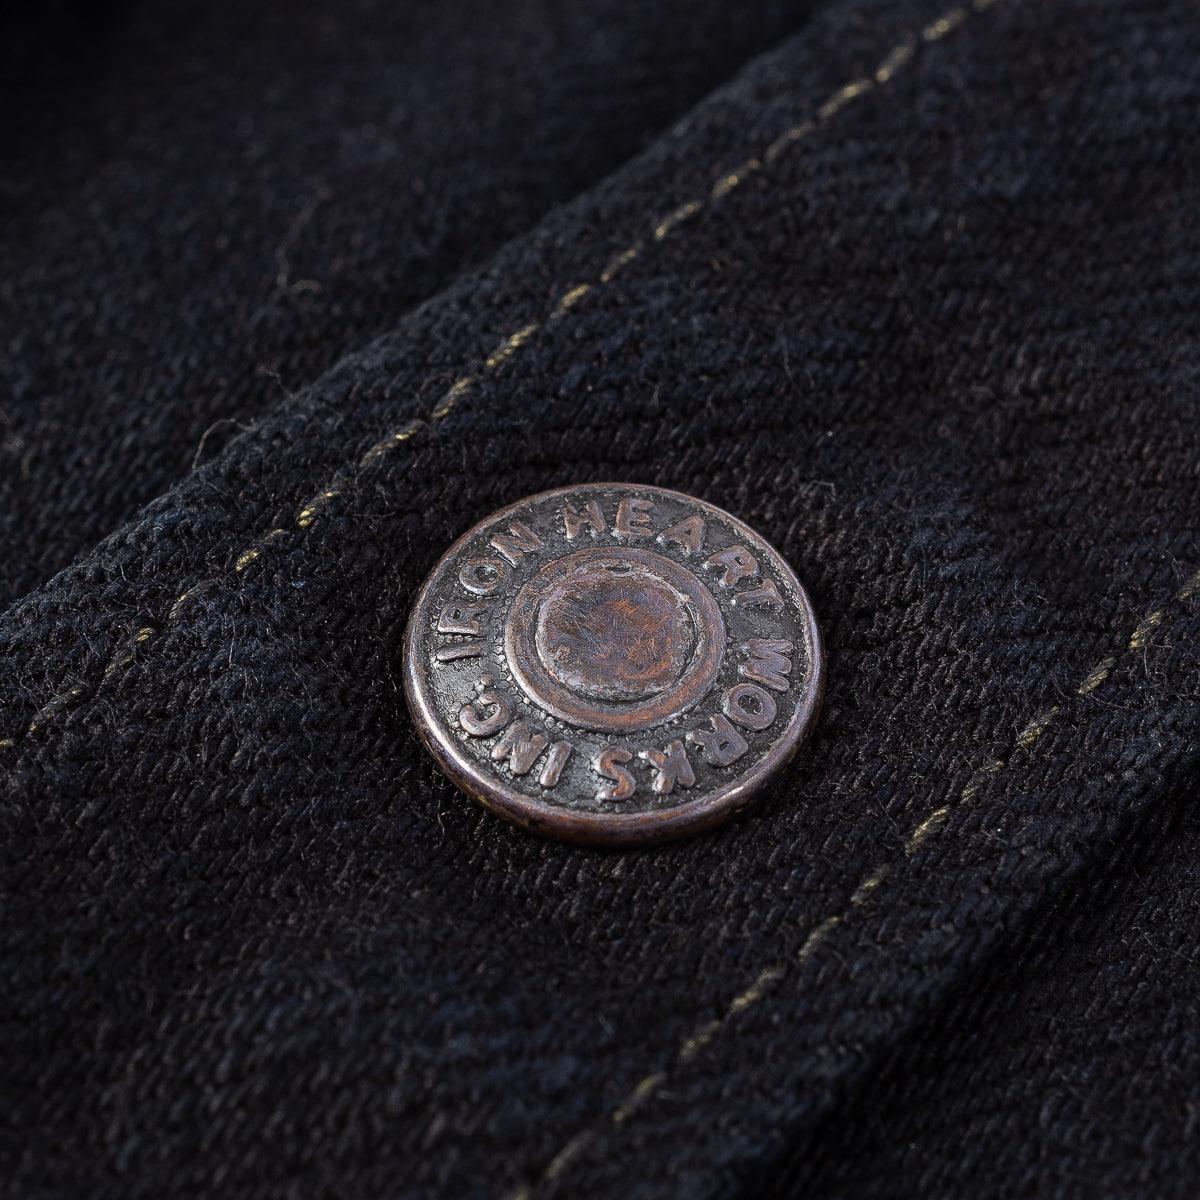 IHSH-293-OD - 18oz Vintage Selvedge Denim CPO Shirt Indigo Overdyed Black